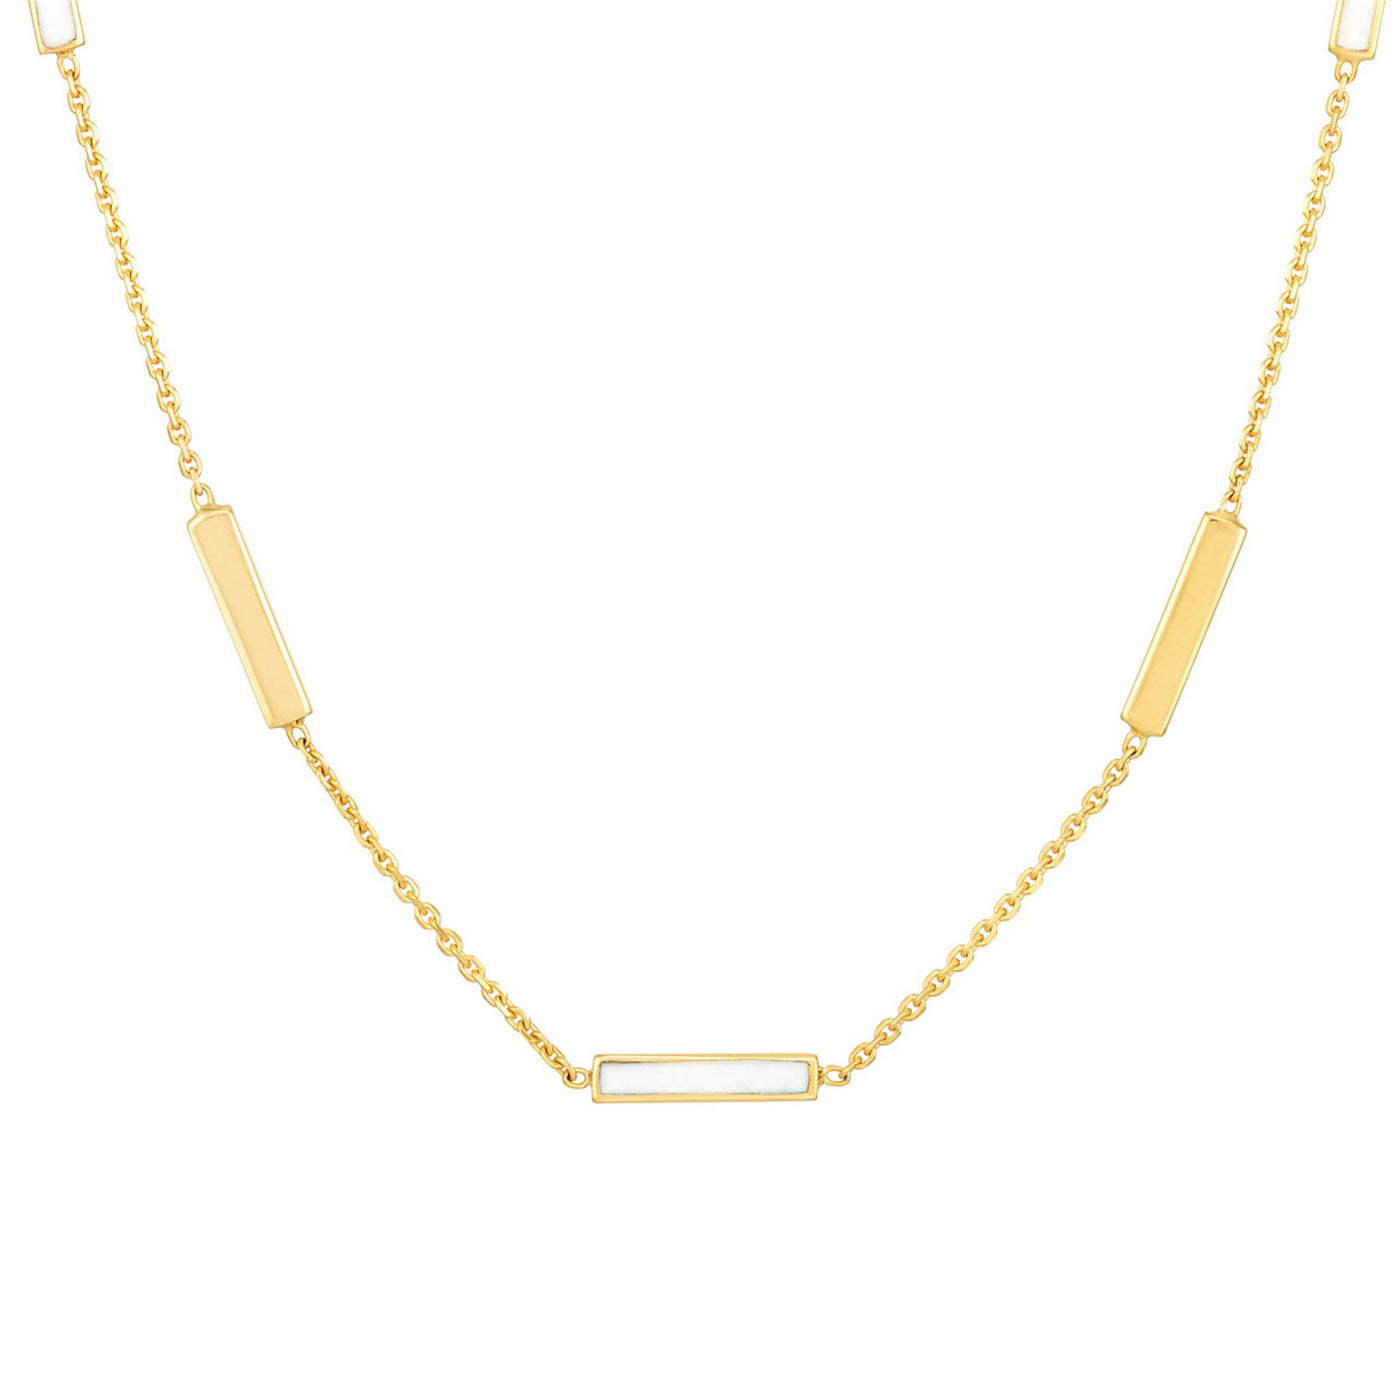 14K Yellow Gold 18" White Enamel Style Bar Necklace